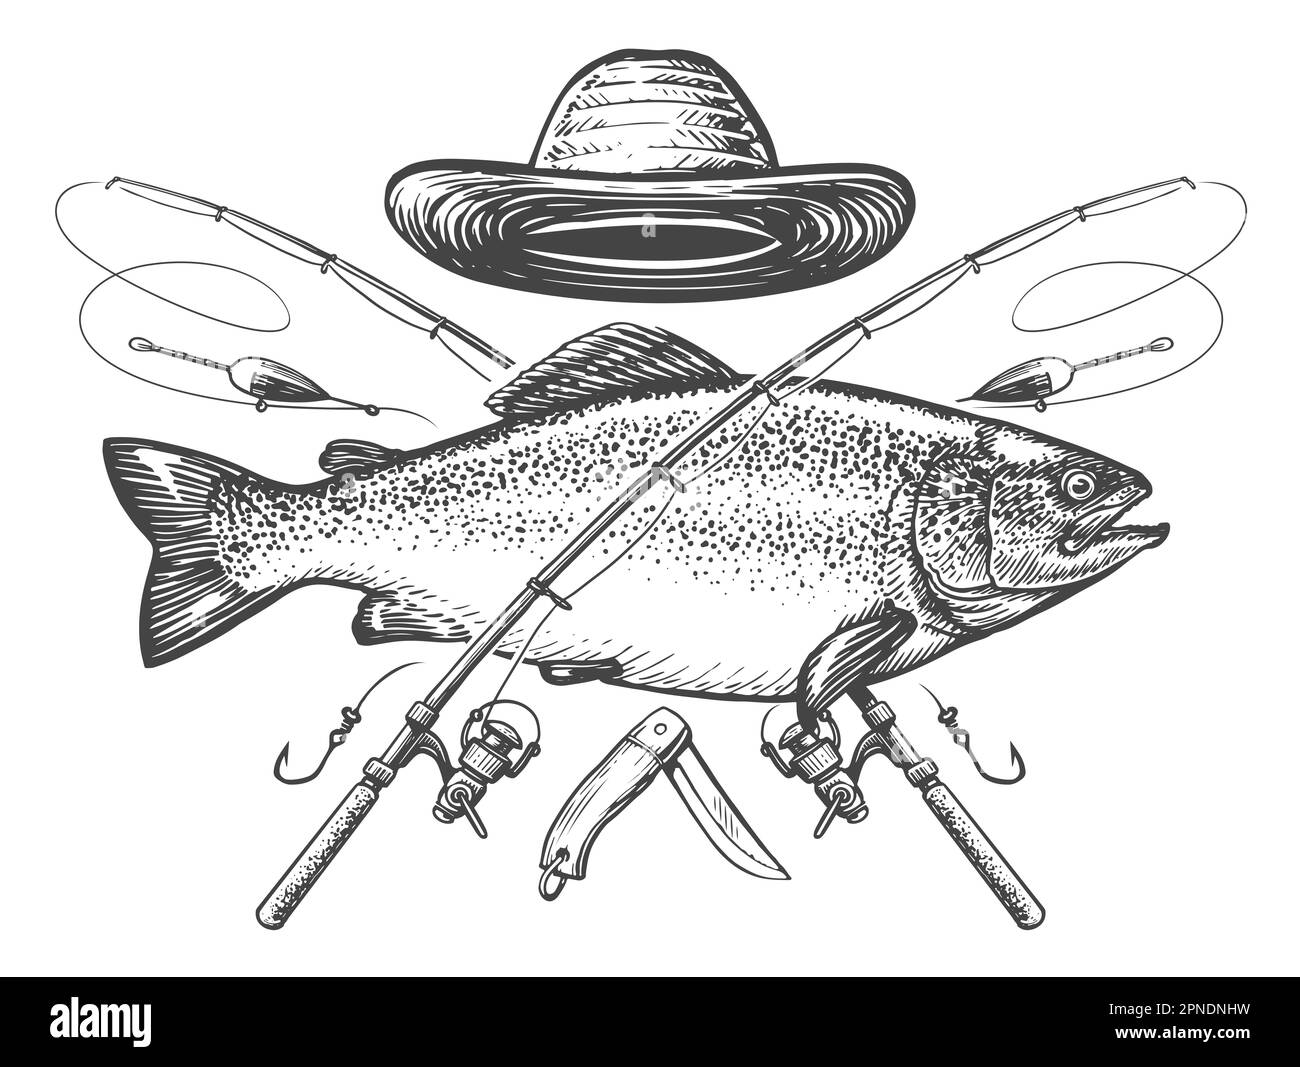 https://c8.alamy.com/comp/2PNDNHW/fishing-emblem-in-vintage-engraving-style-fish-and-rod-symbol-sports-recreation-sketch-illustration-2PNDNHW.jpg